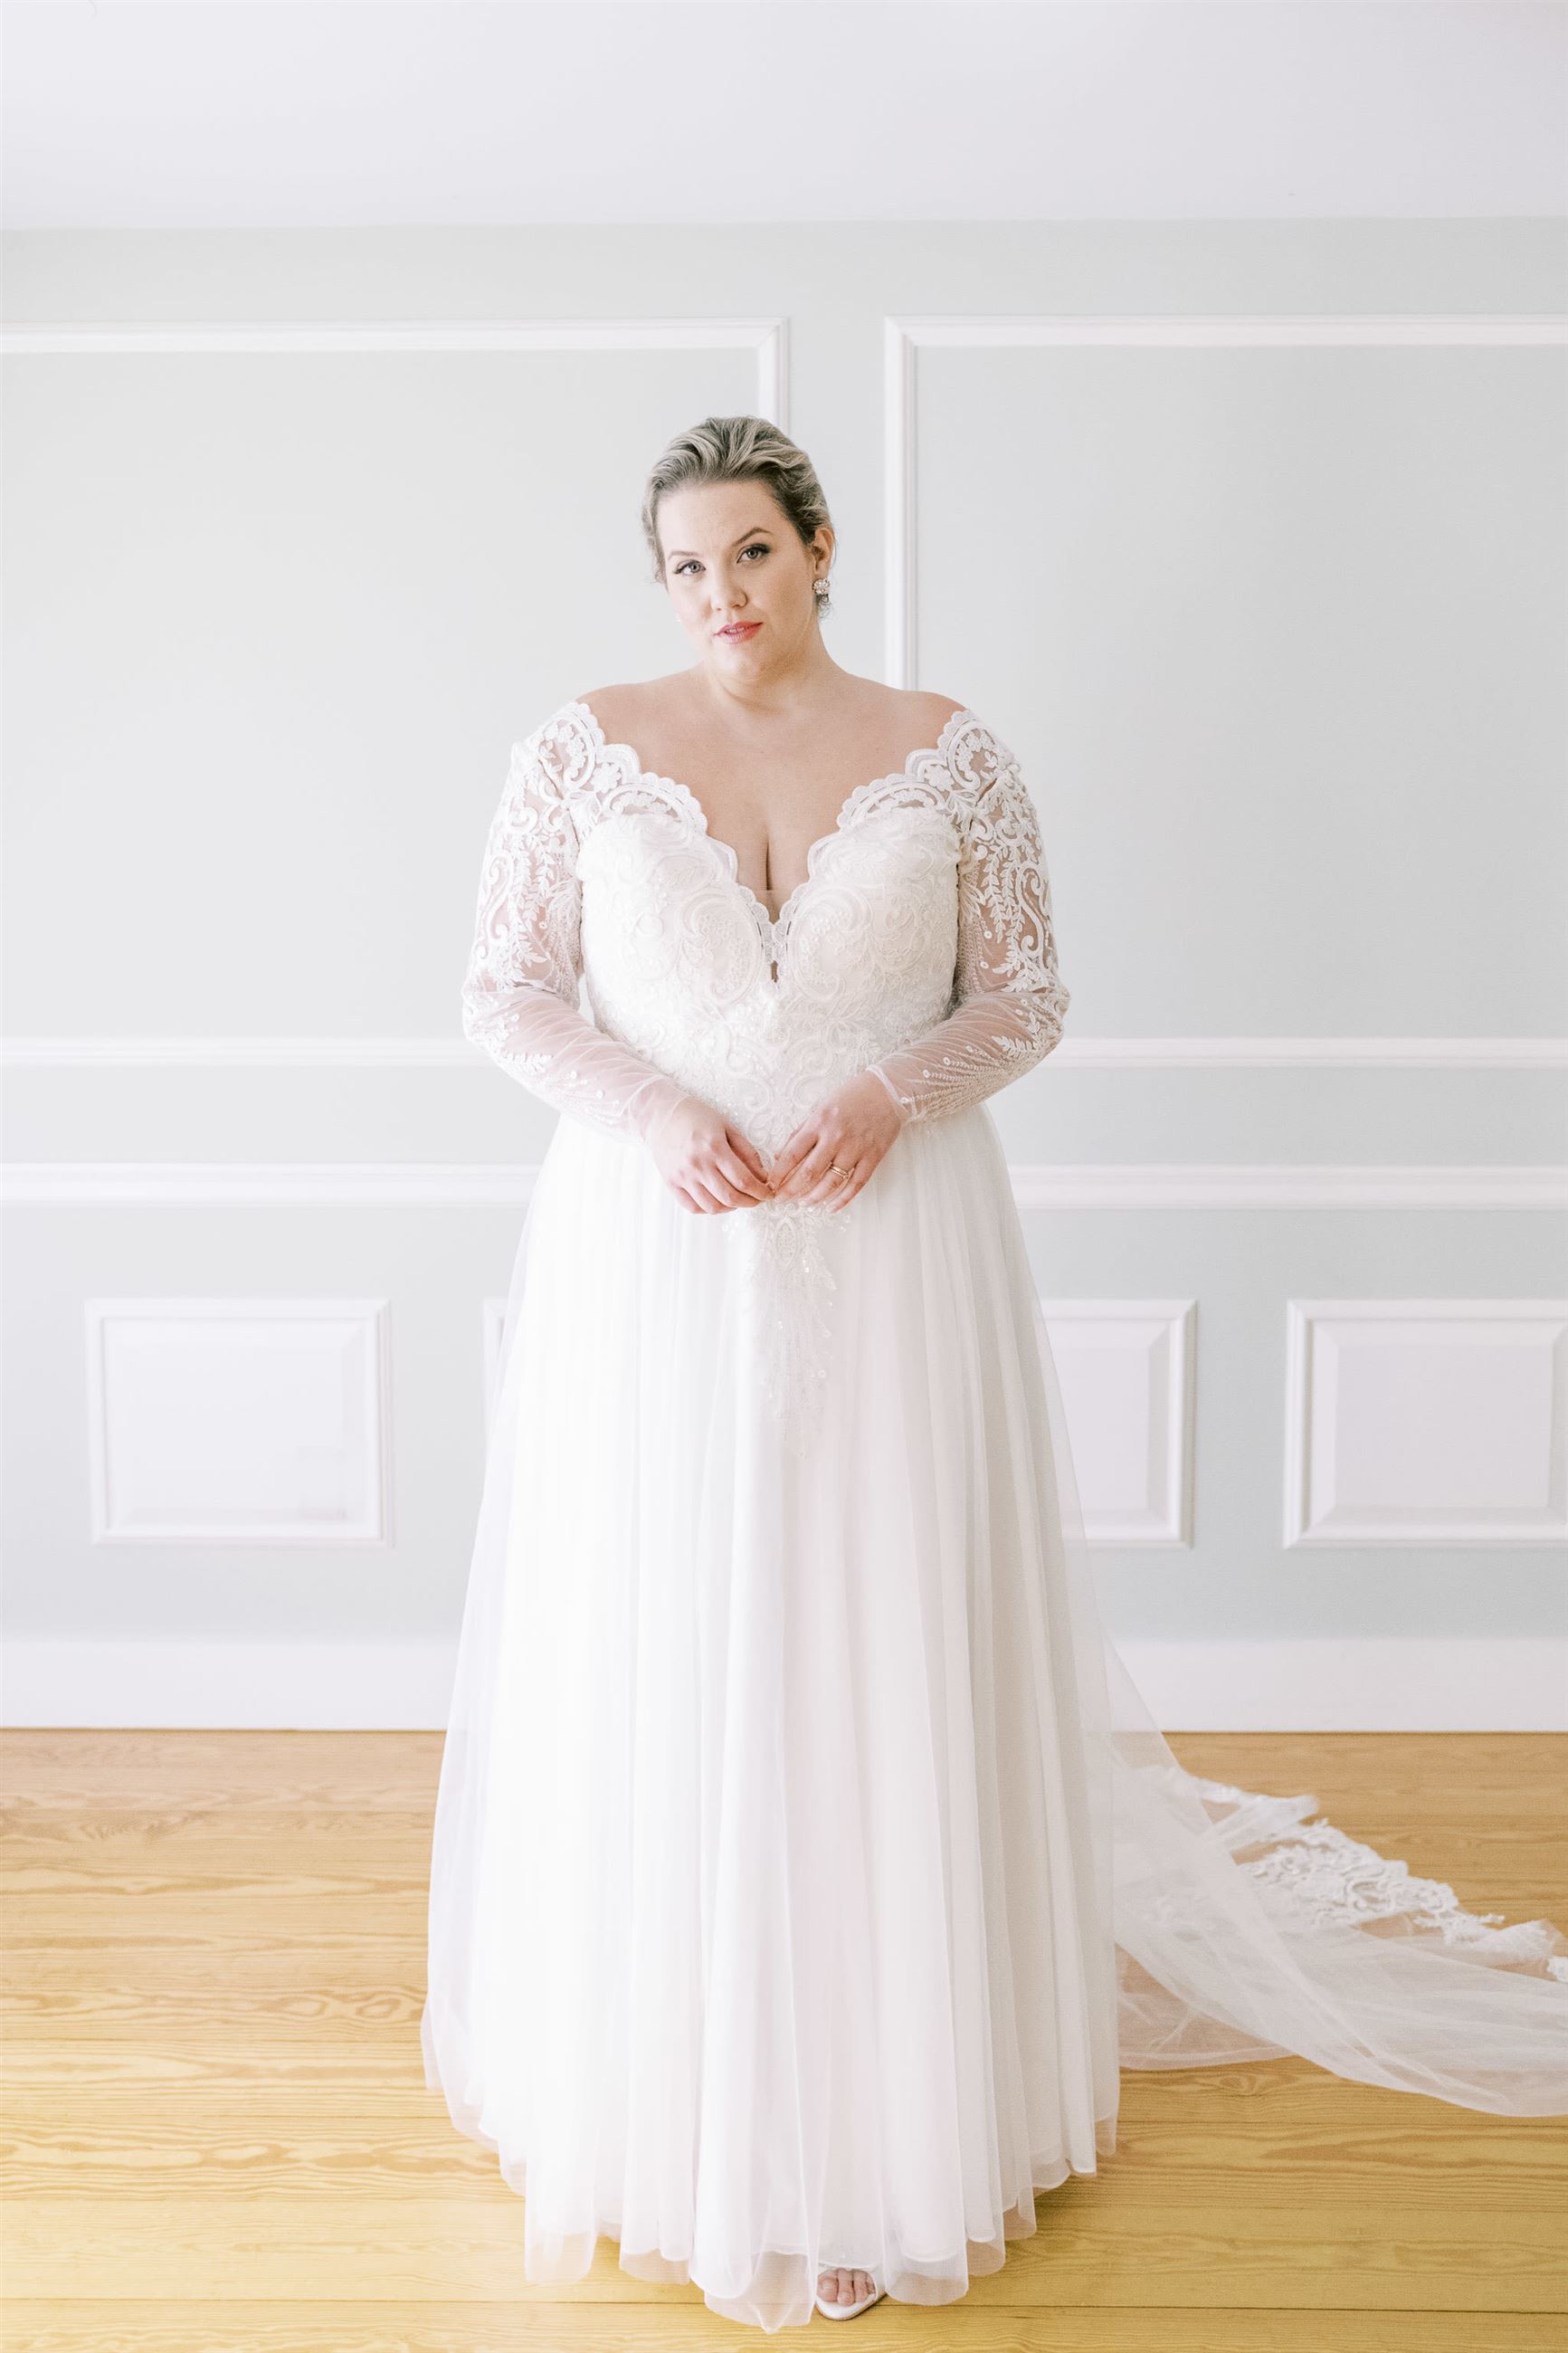 Plus size bride wearing lace long sleeve wedding dress